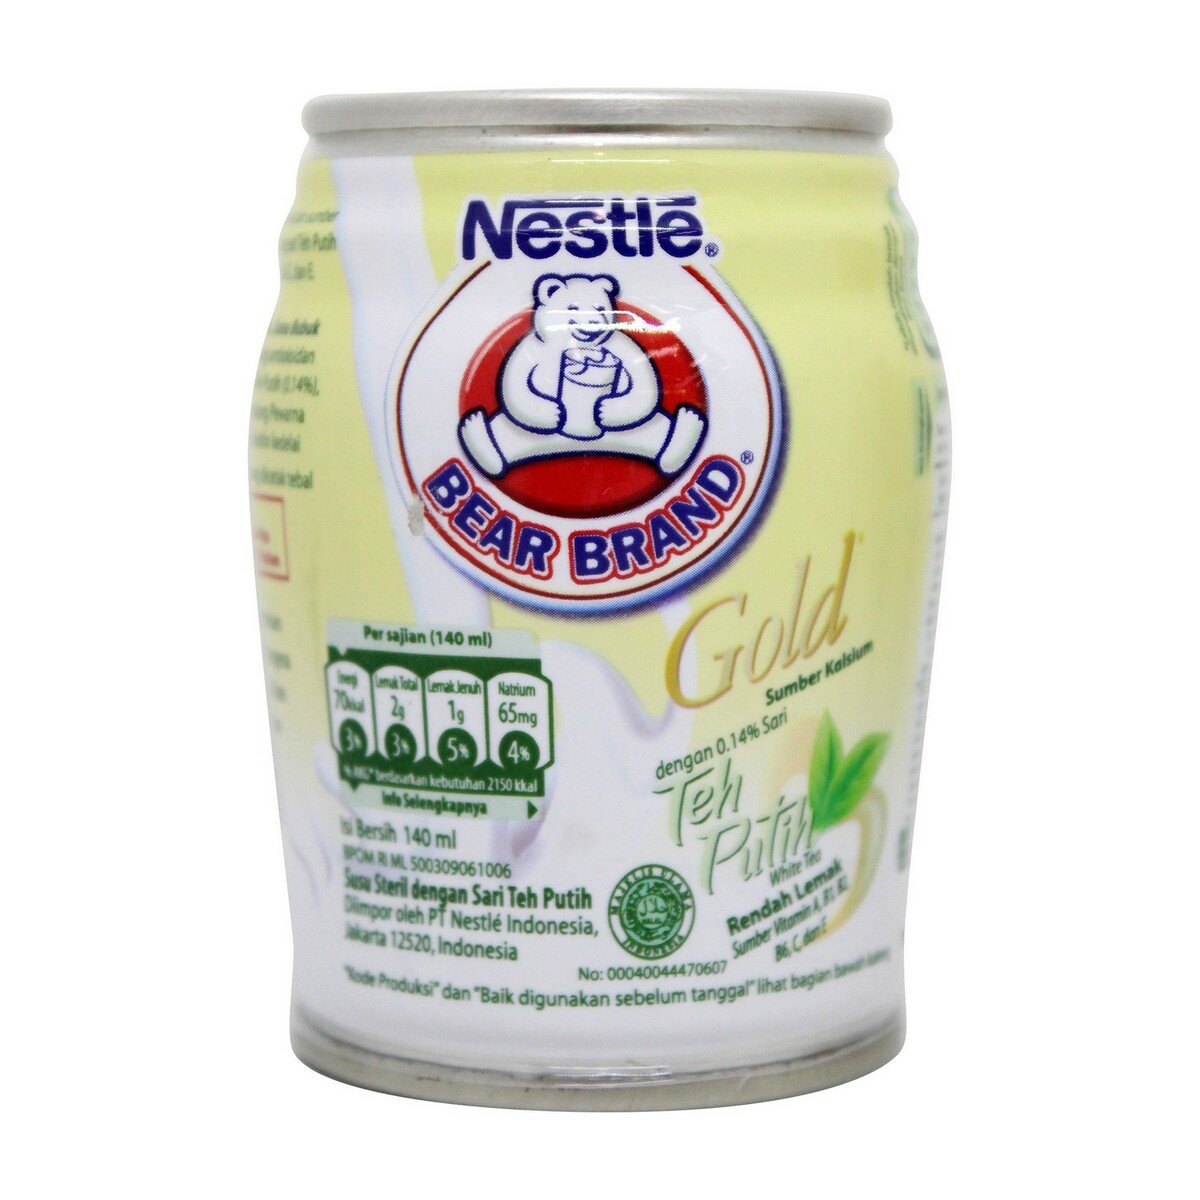 Bear Brand White Tea 140ml